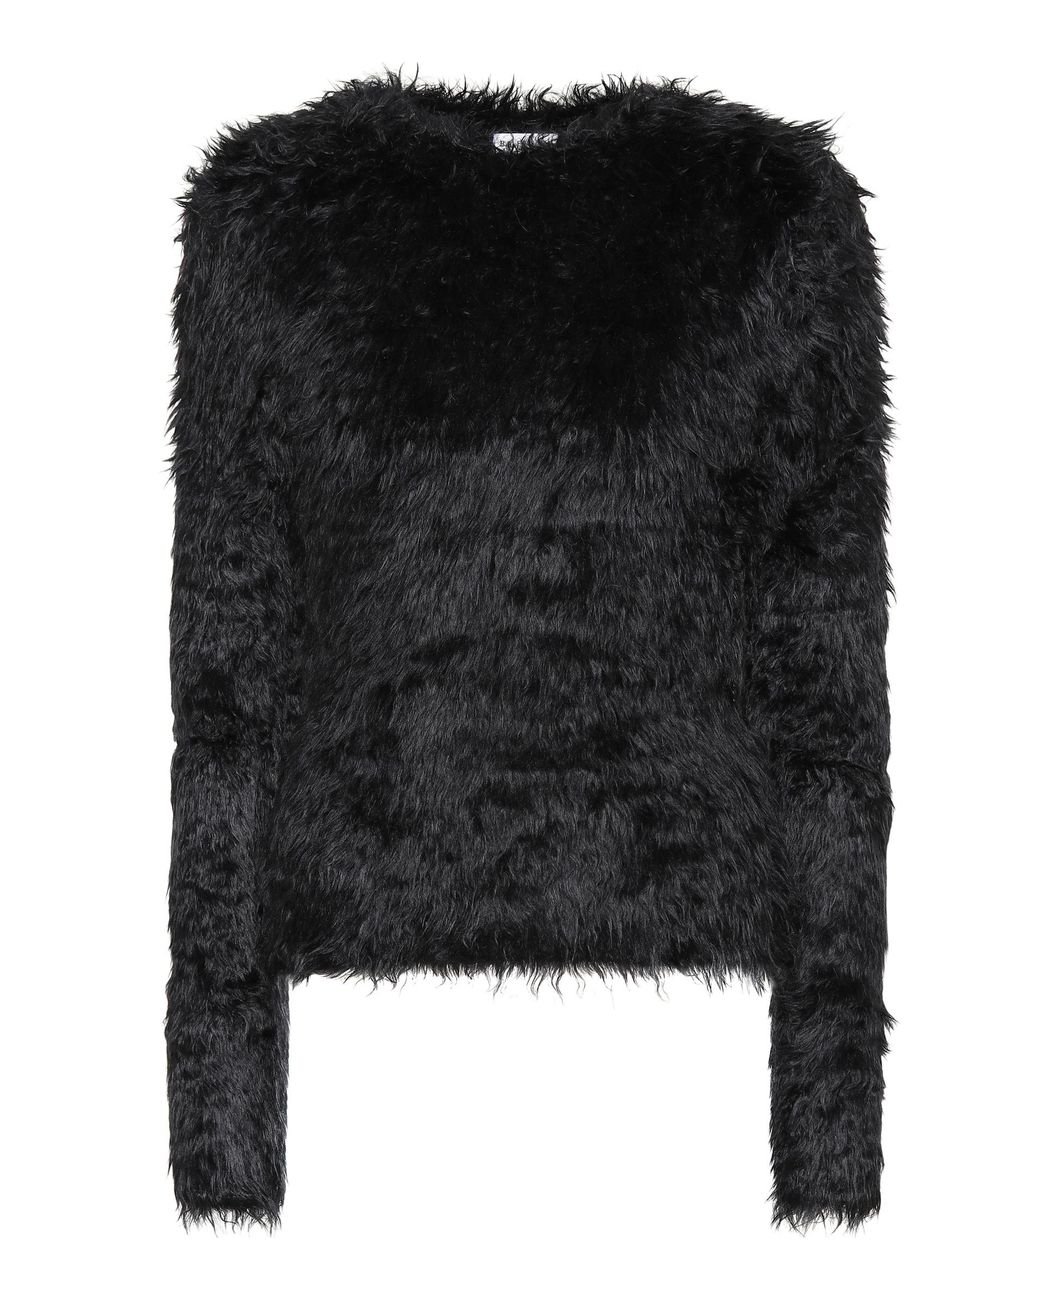 Balenciaga Faux Fur Sweater in Black - Save 28% - Lyst